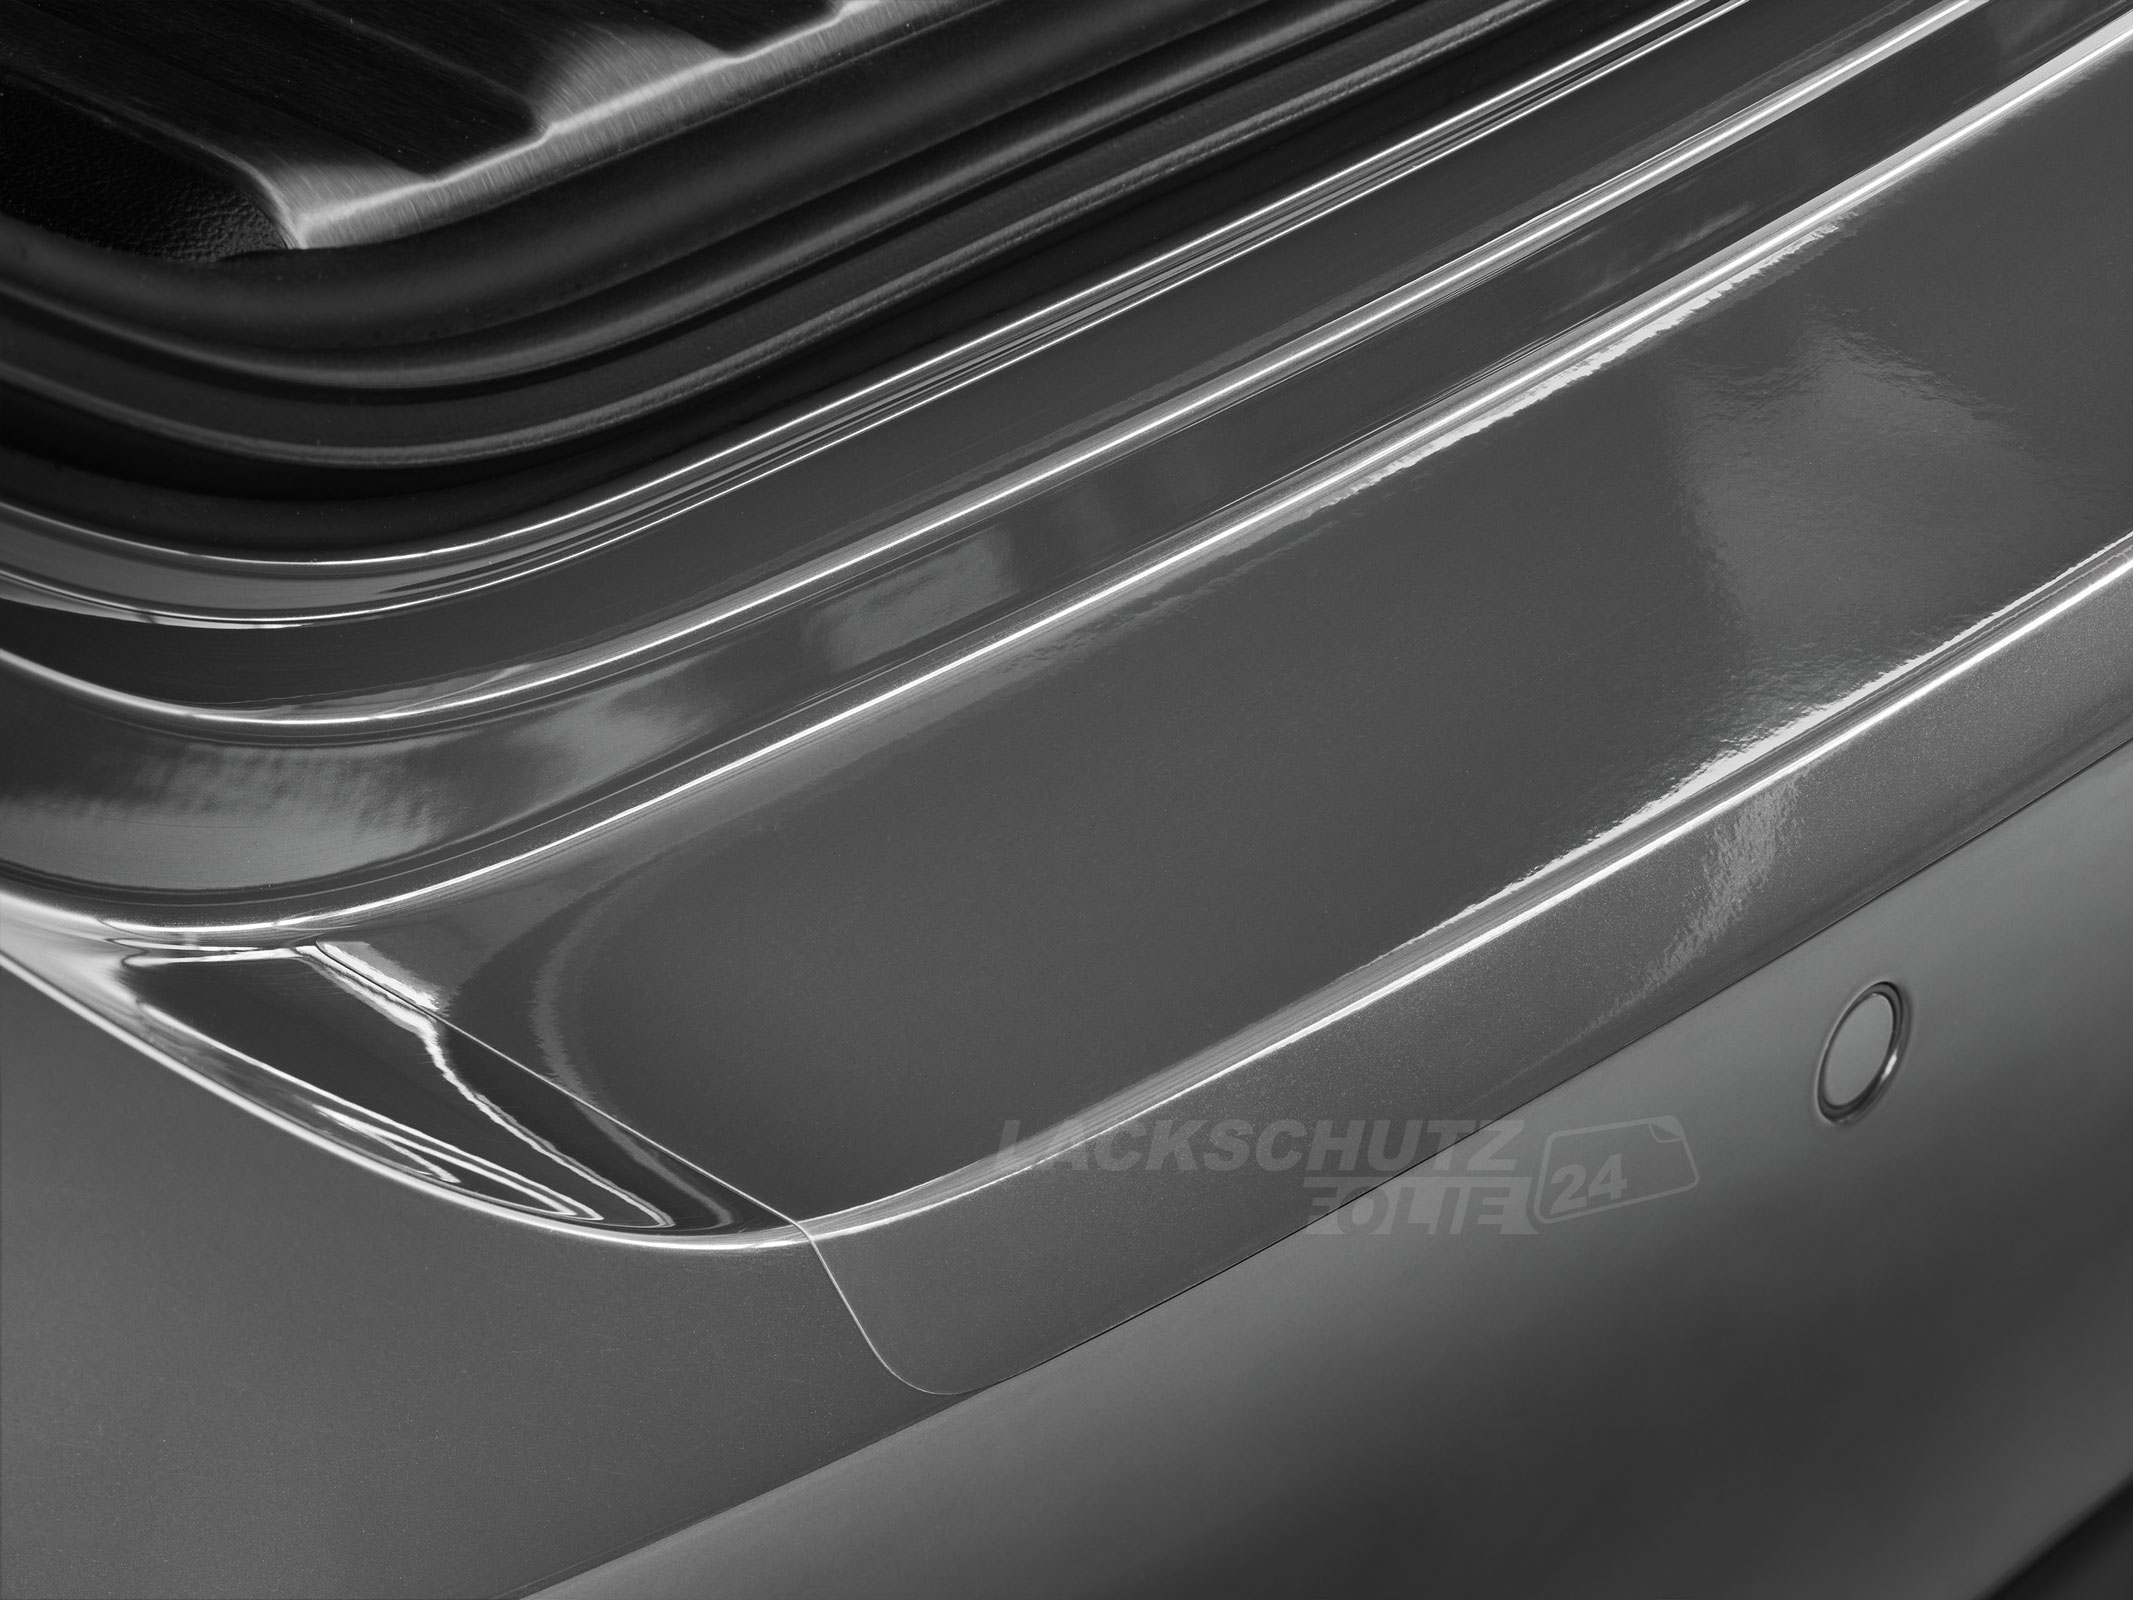 Ladekantenschutzfolie - Transparent Glatt Hochglänzend 240 µm stark für Hyundai ix20 ab BJ 10/2010